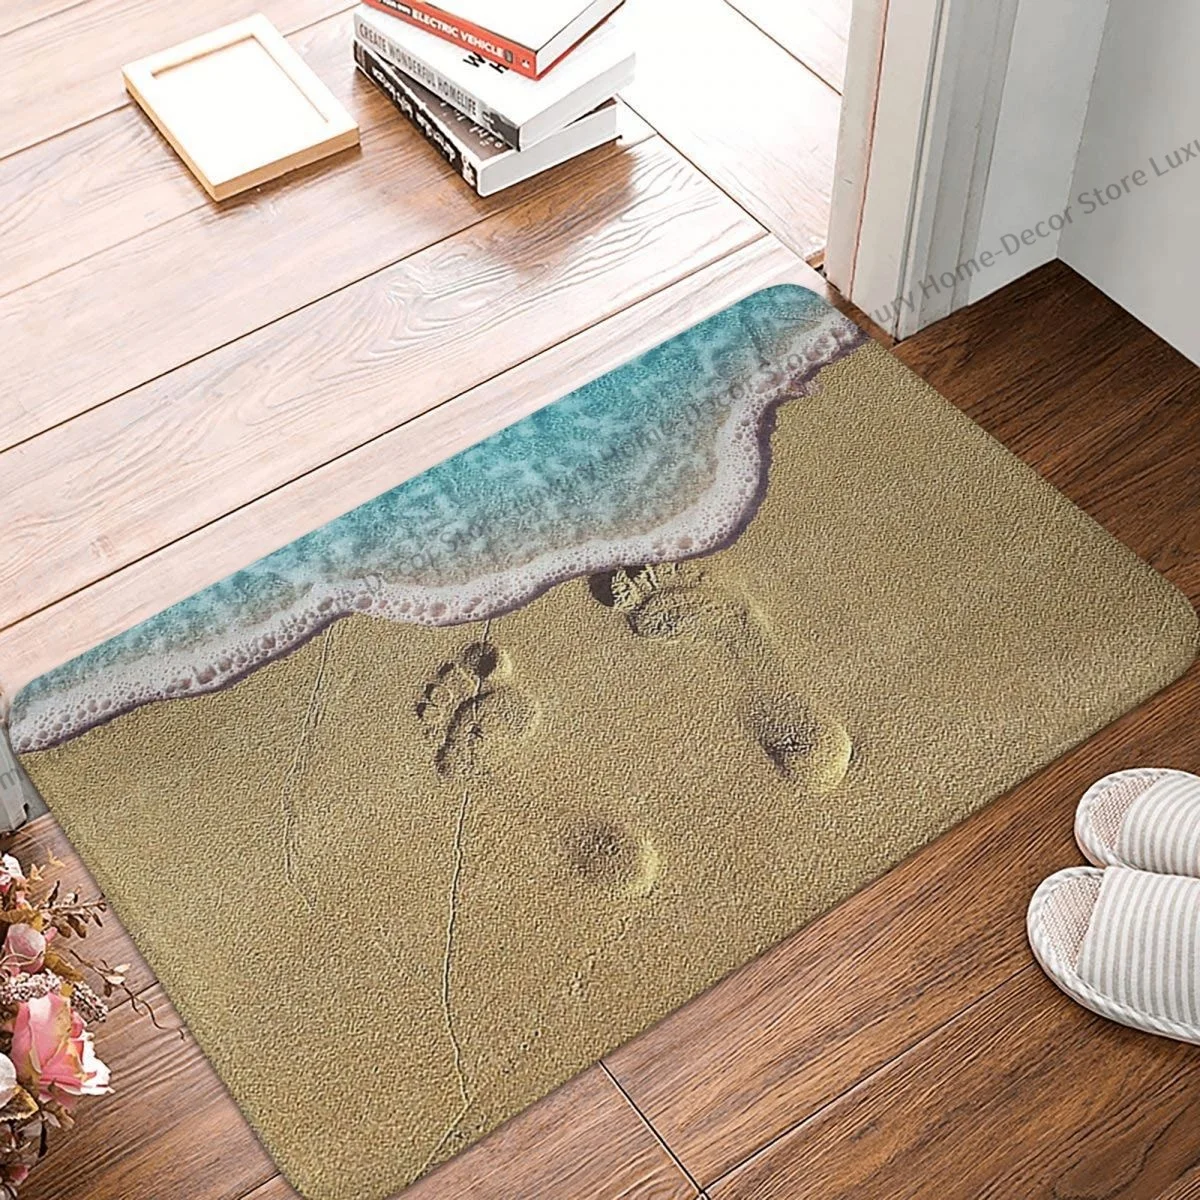 https://ae01.alicdn.com/kf/S527da68ca5e8490998eca40741fe33714/Bathroom-Non-Slip-Carpet-Beach-Feet-Bedroom-Mat-Welcome-Doormat-Floor-Decor-Rug.jpg